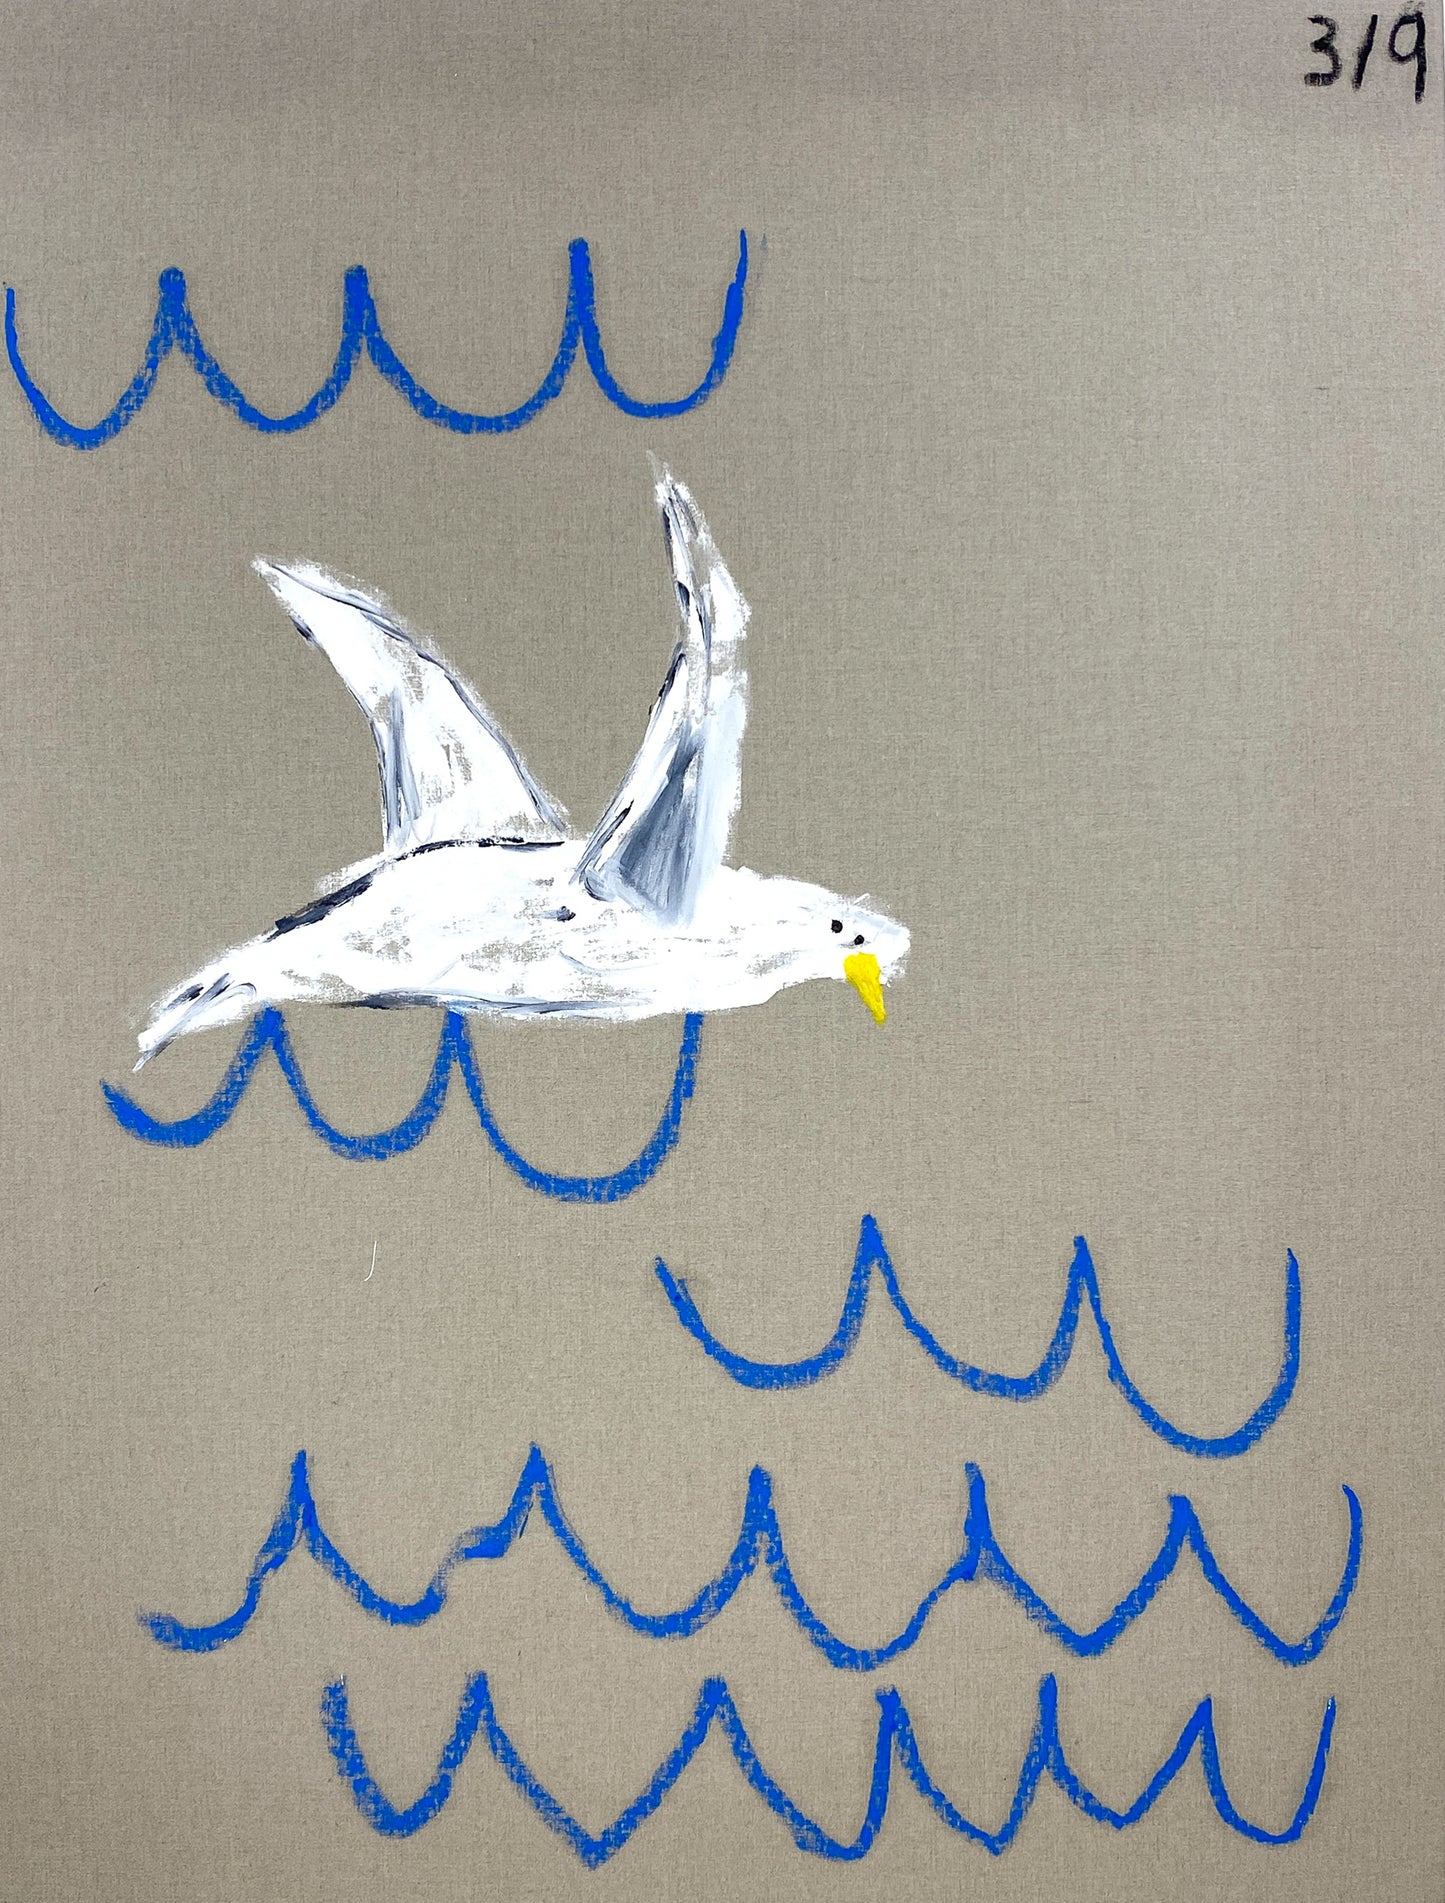 Seagulls and the Sea 3/9